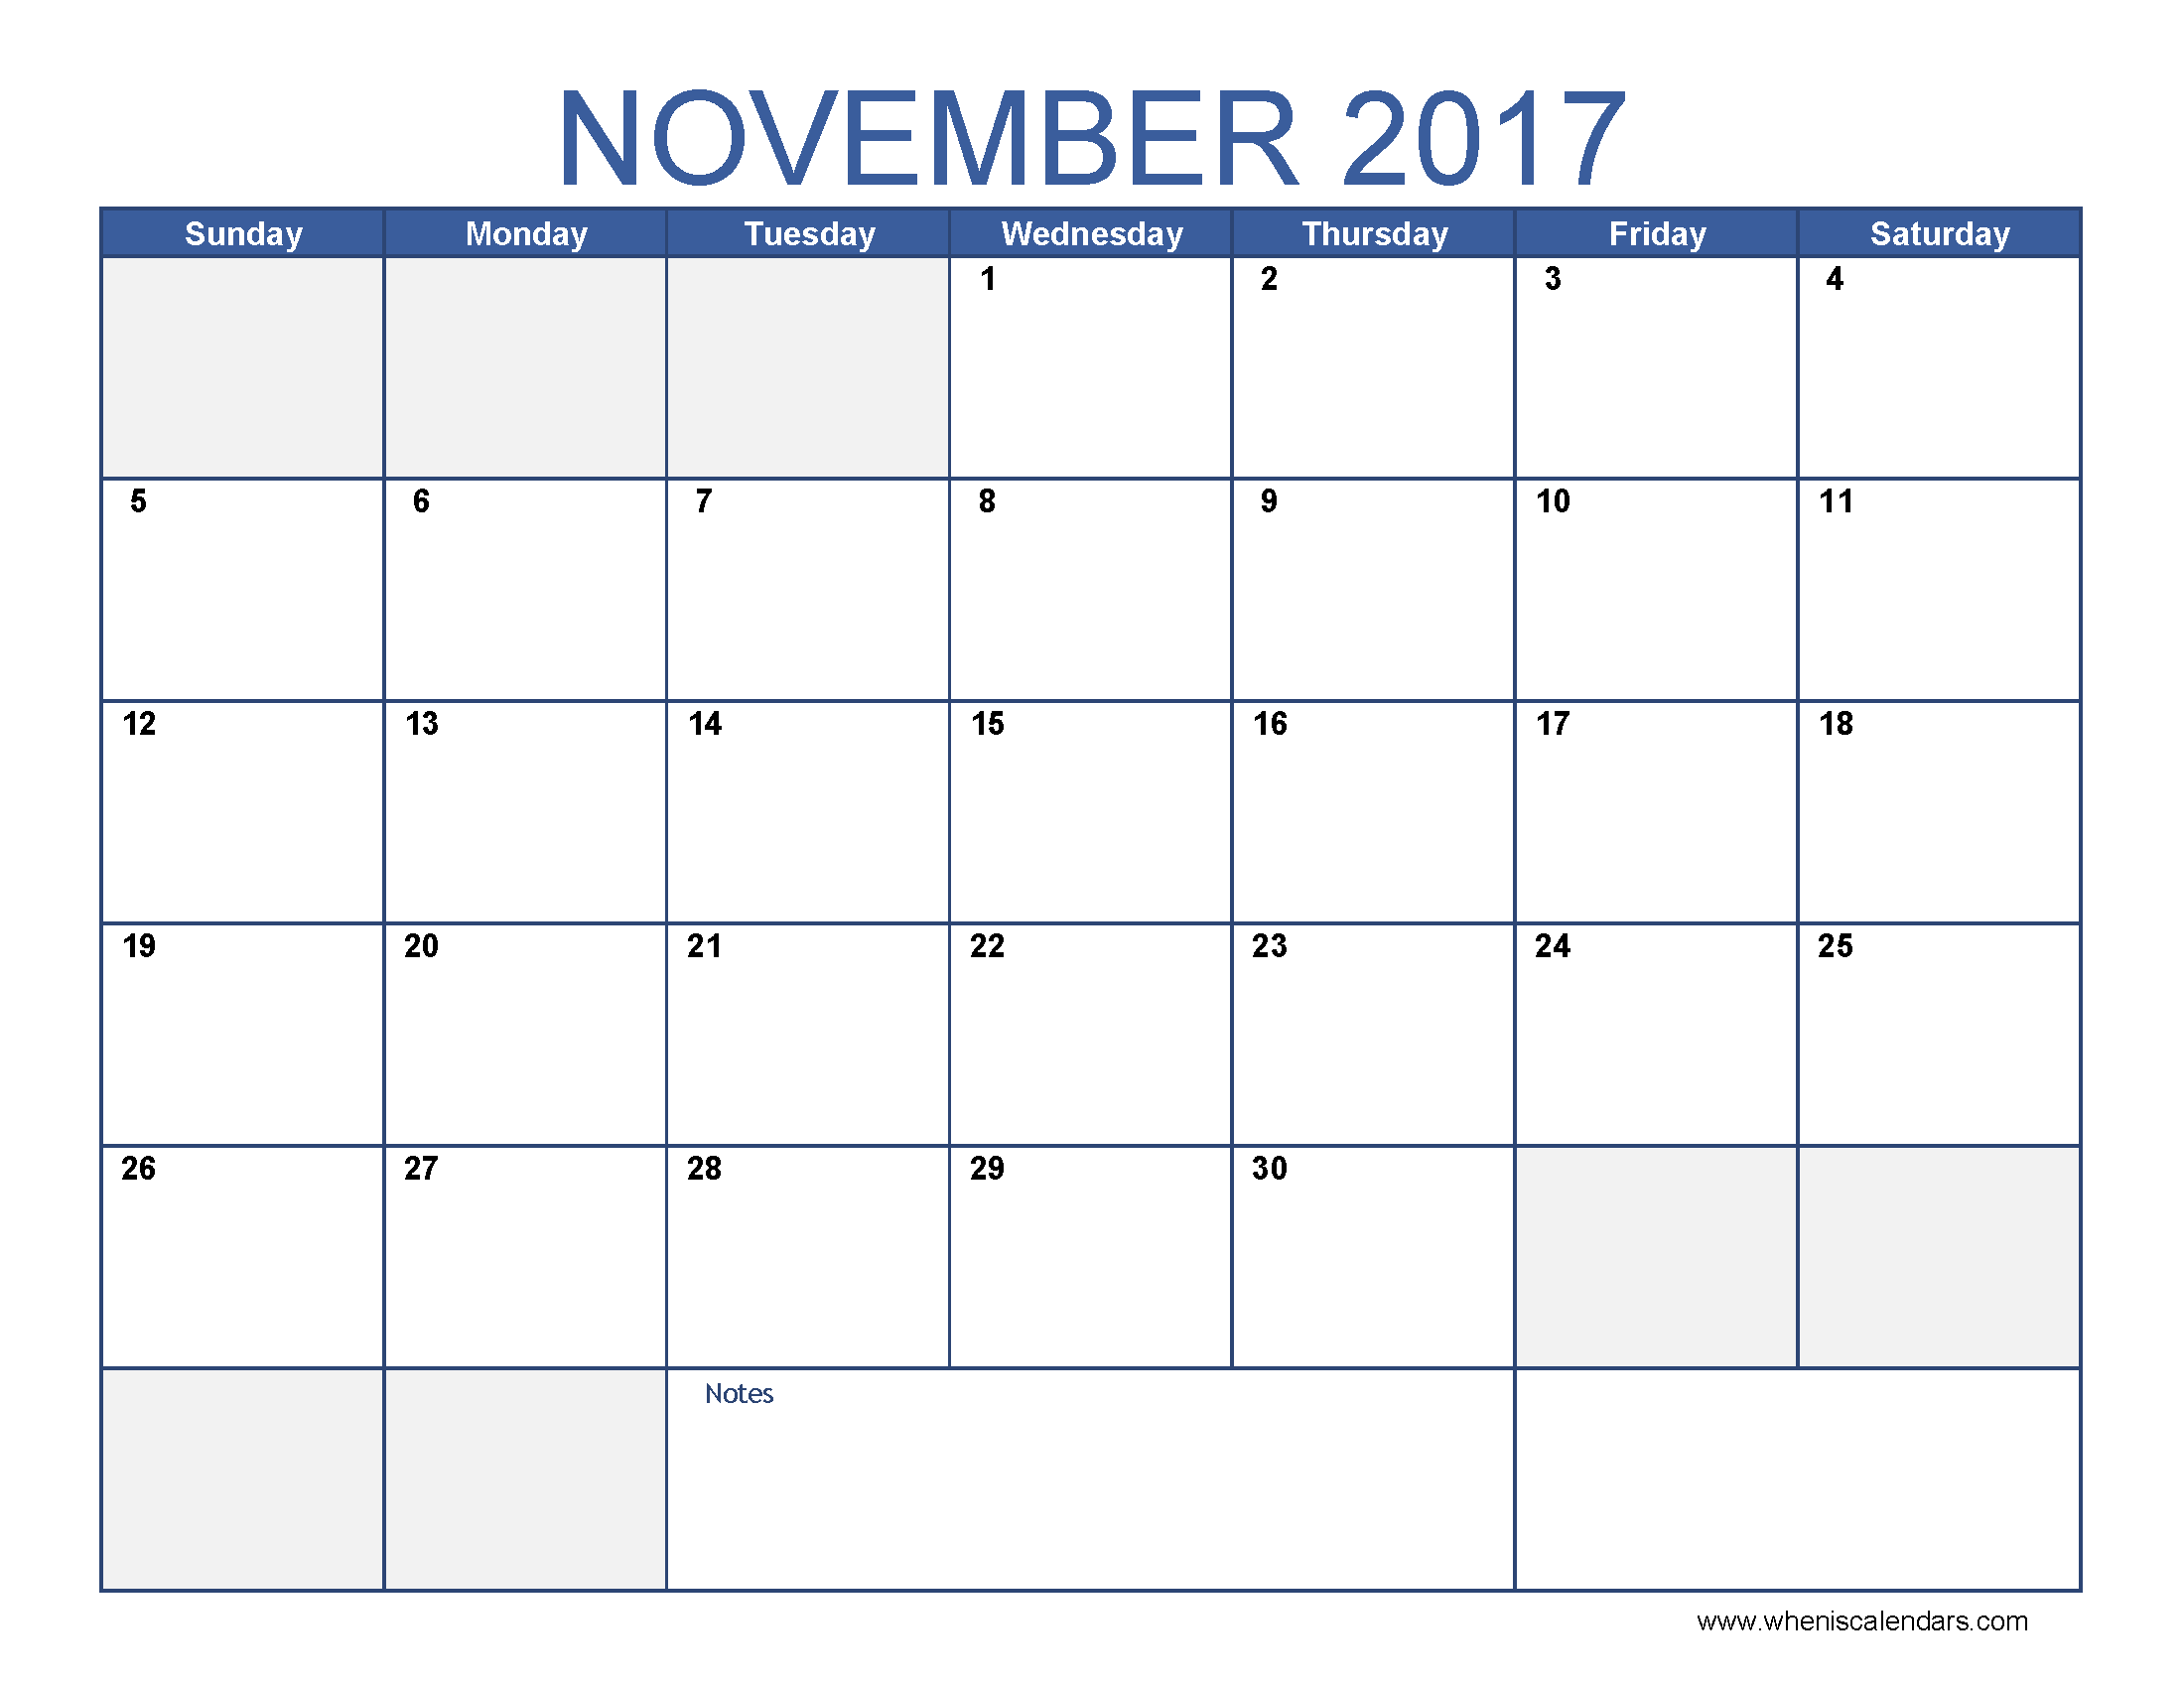 November 2017 Calendar Template | free calendar 2017